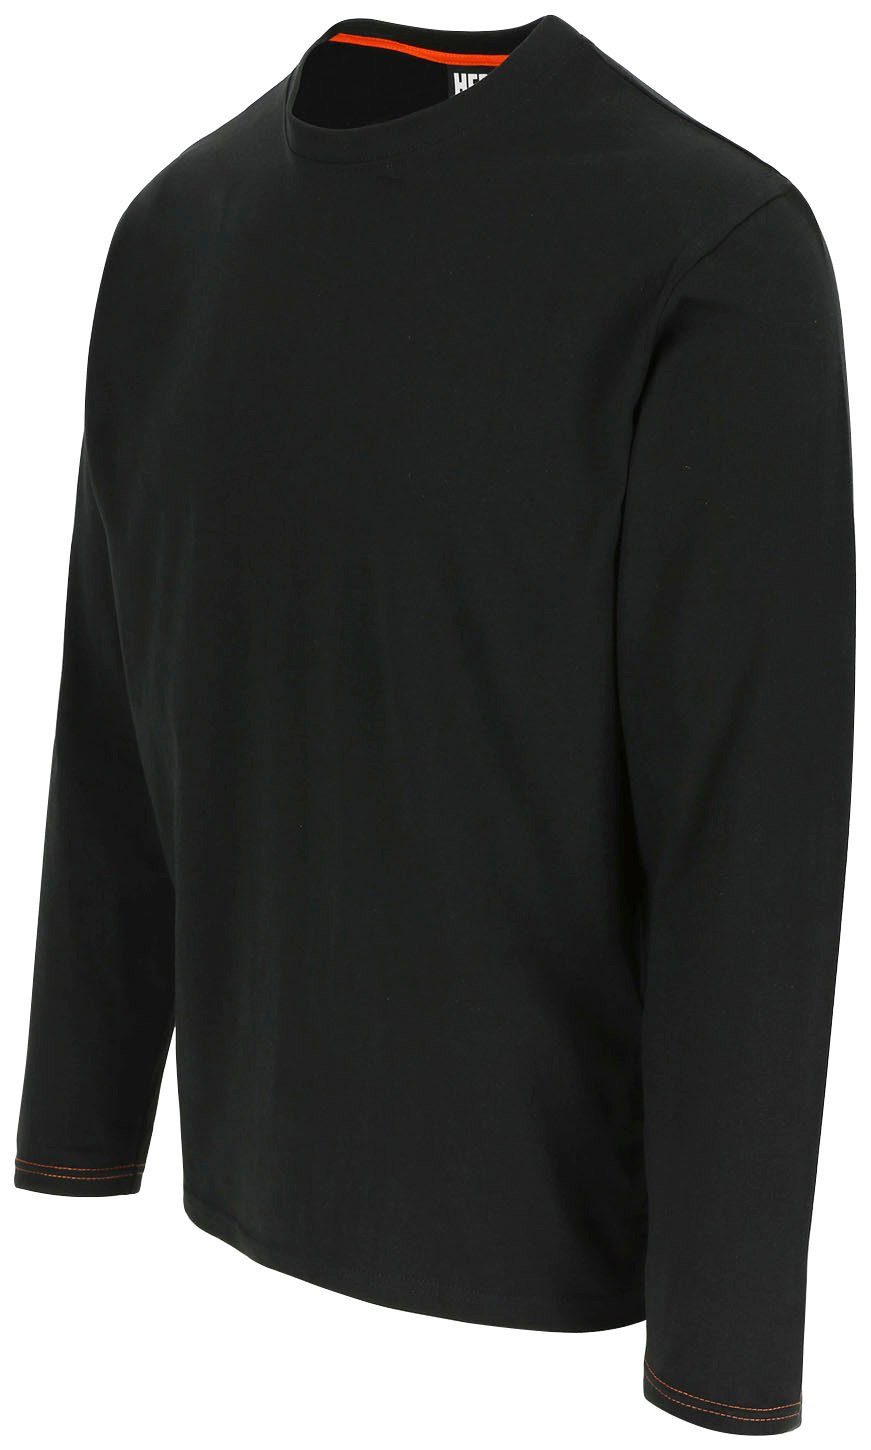 schwarz Basic Noet Baumwolle, angenehmes langärmlig Herock Tragegefühl, % vorgeschrumpfte t-shirt Langarmshirt 100